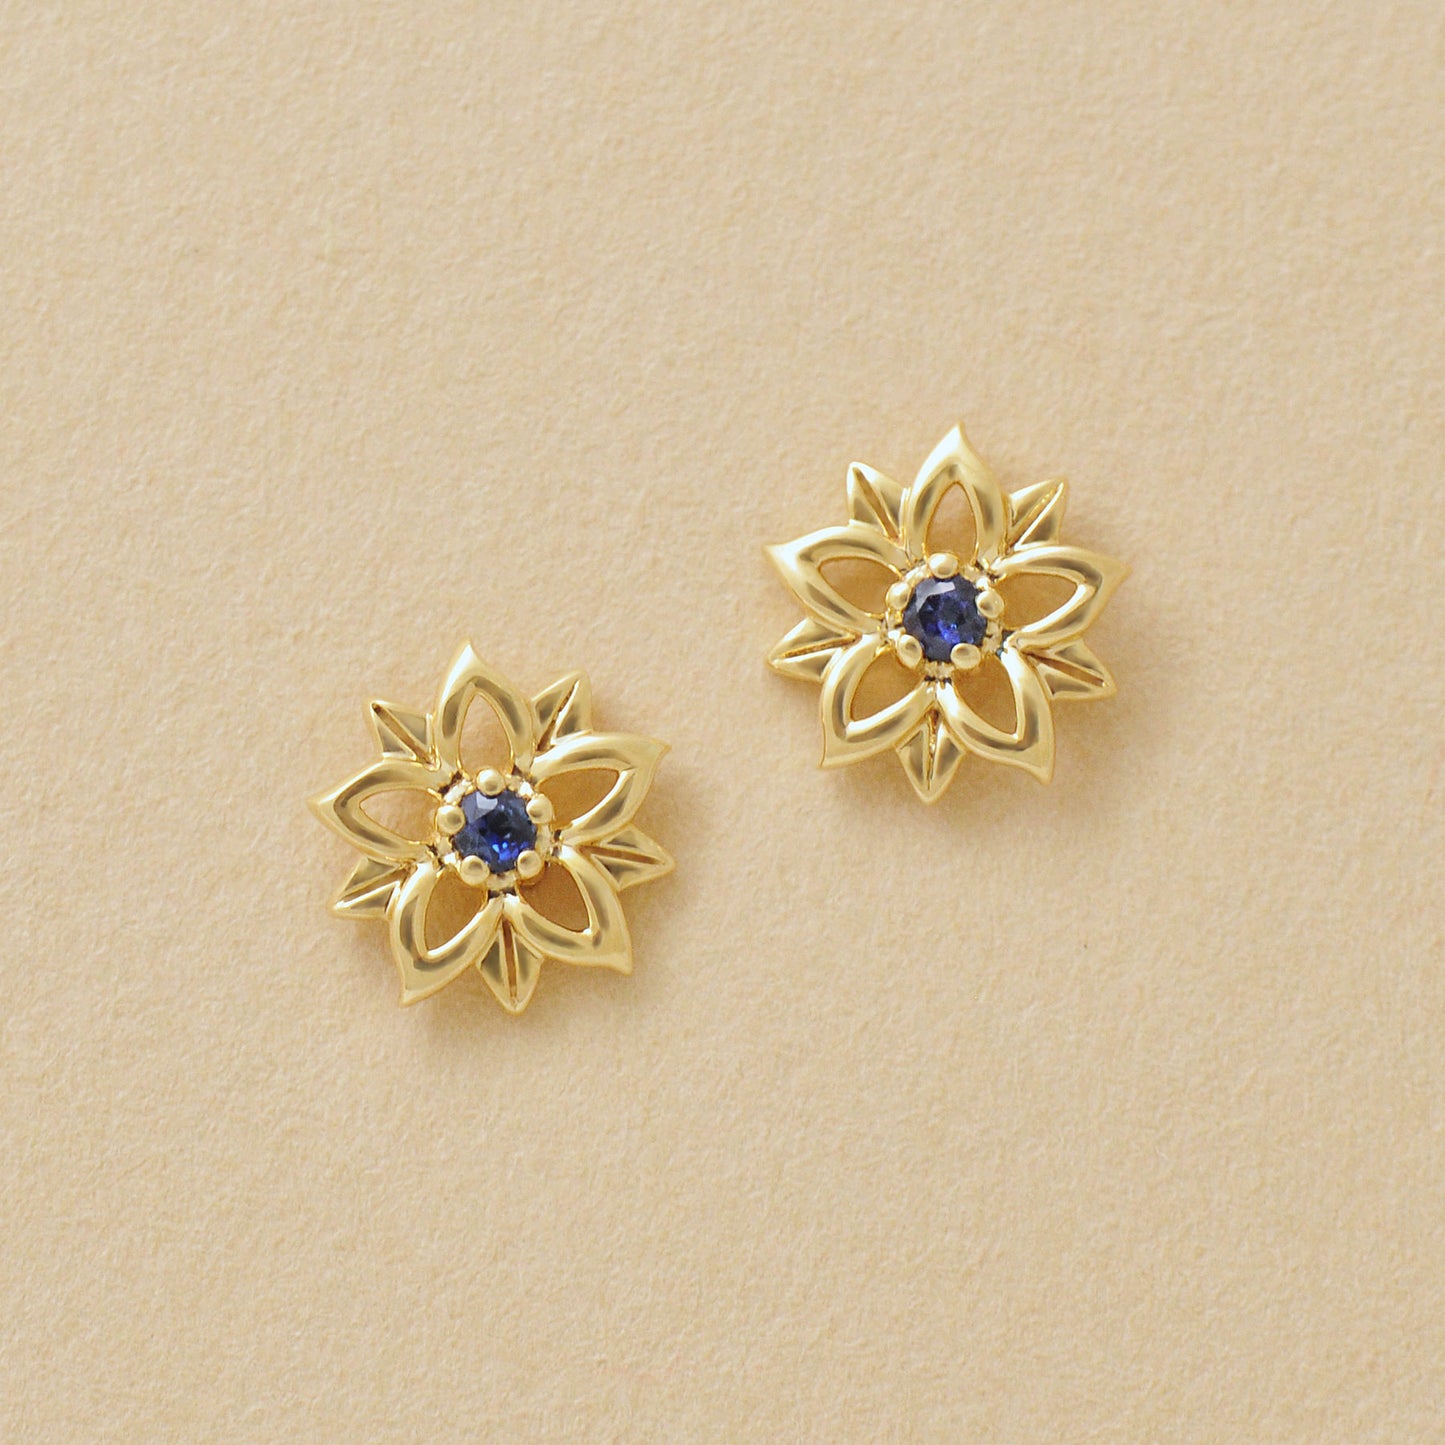 [Birth Flower Jewelry] September - Gentian Openwork Earrings (18K/10K Yellow Gold) - Product Image